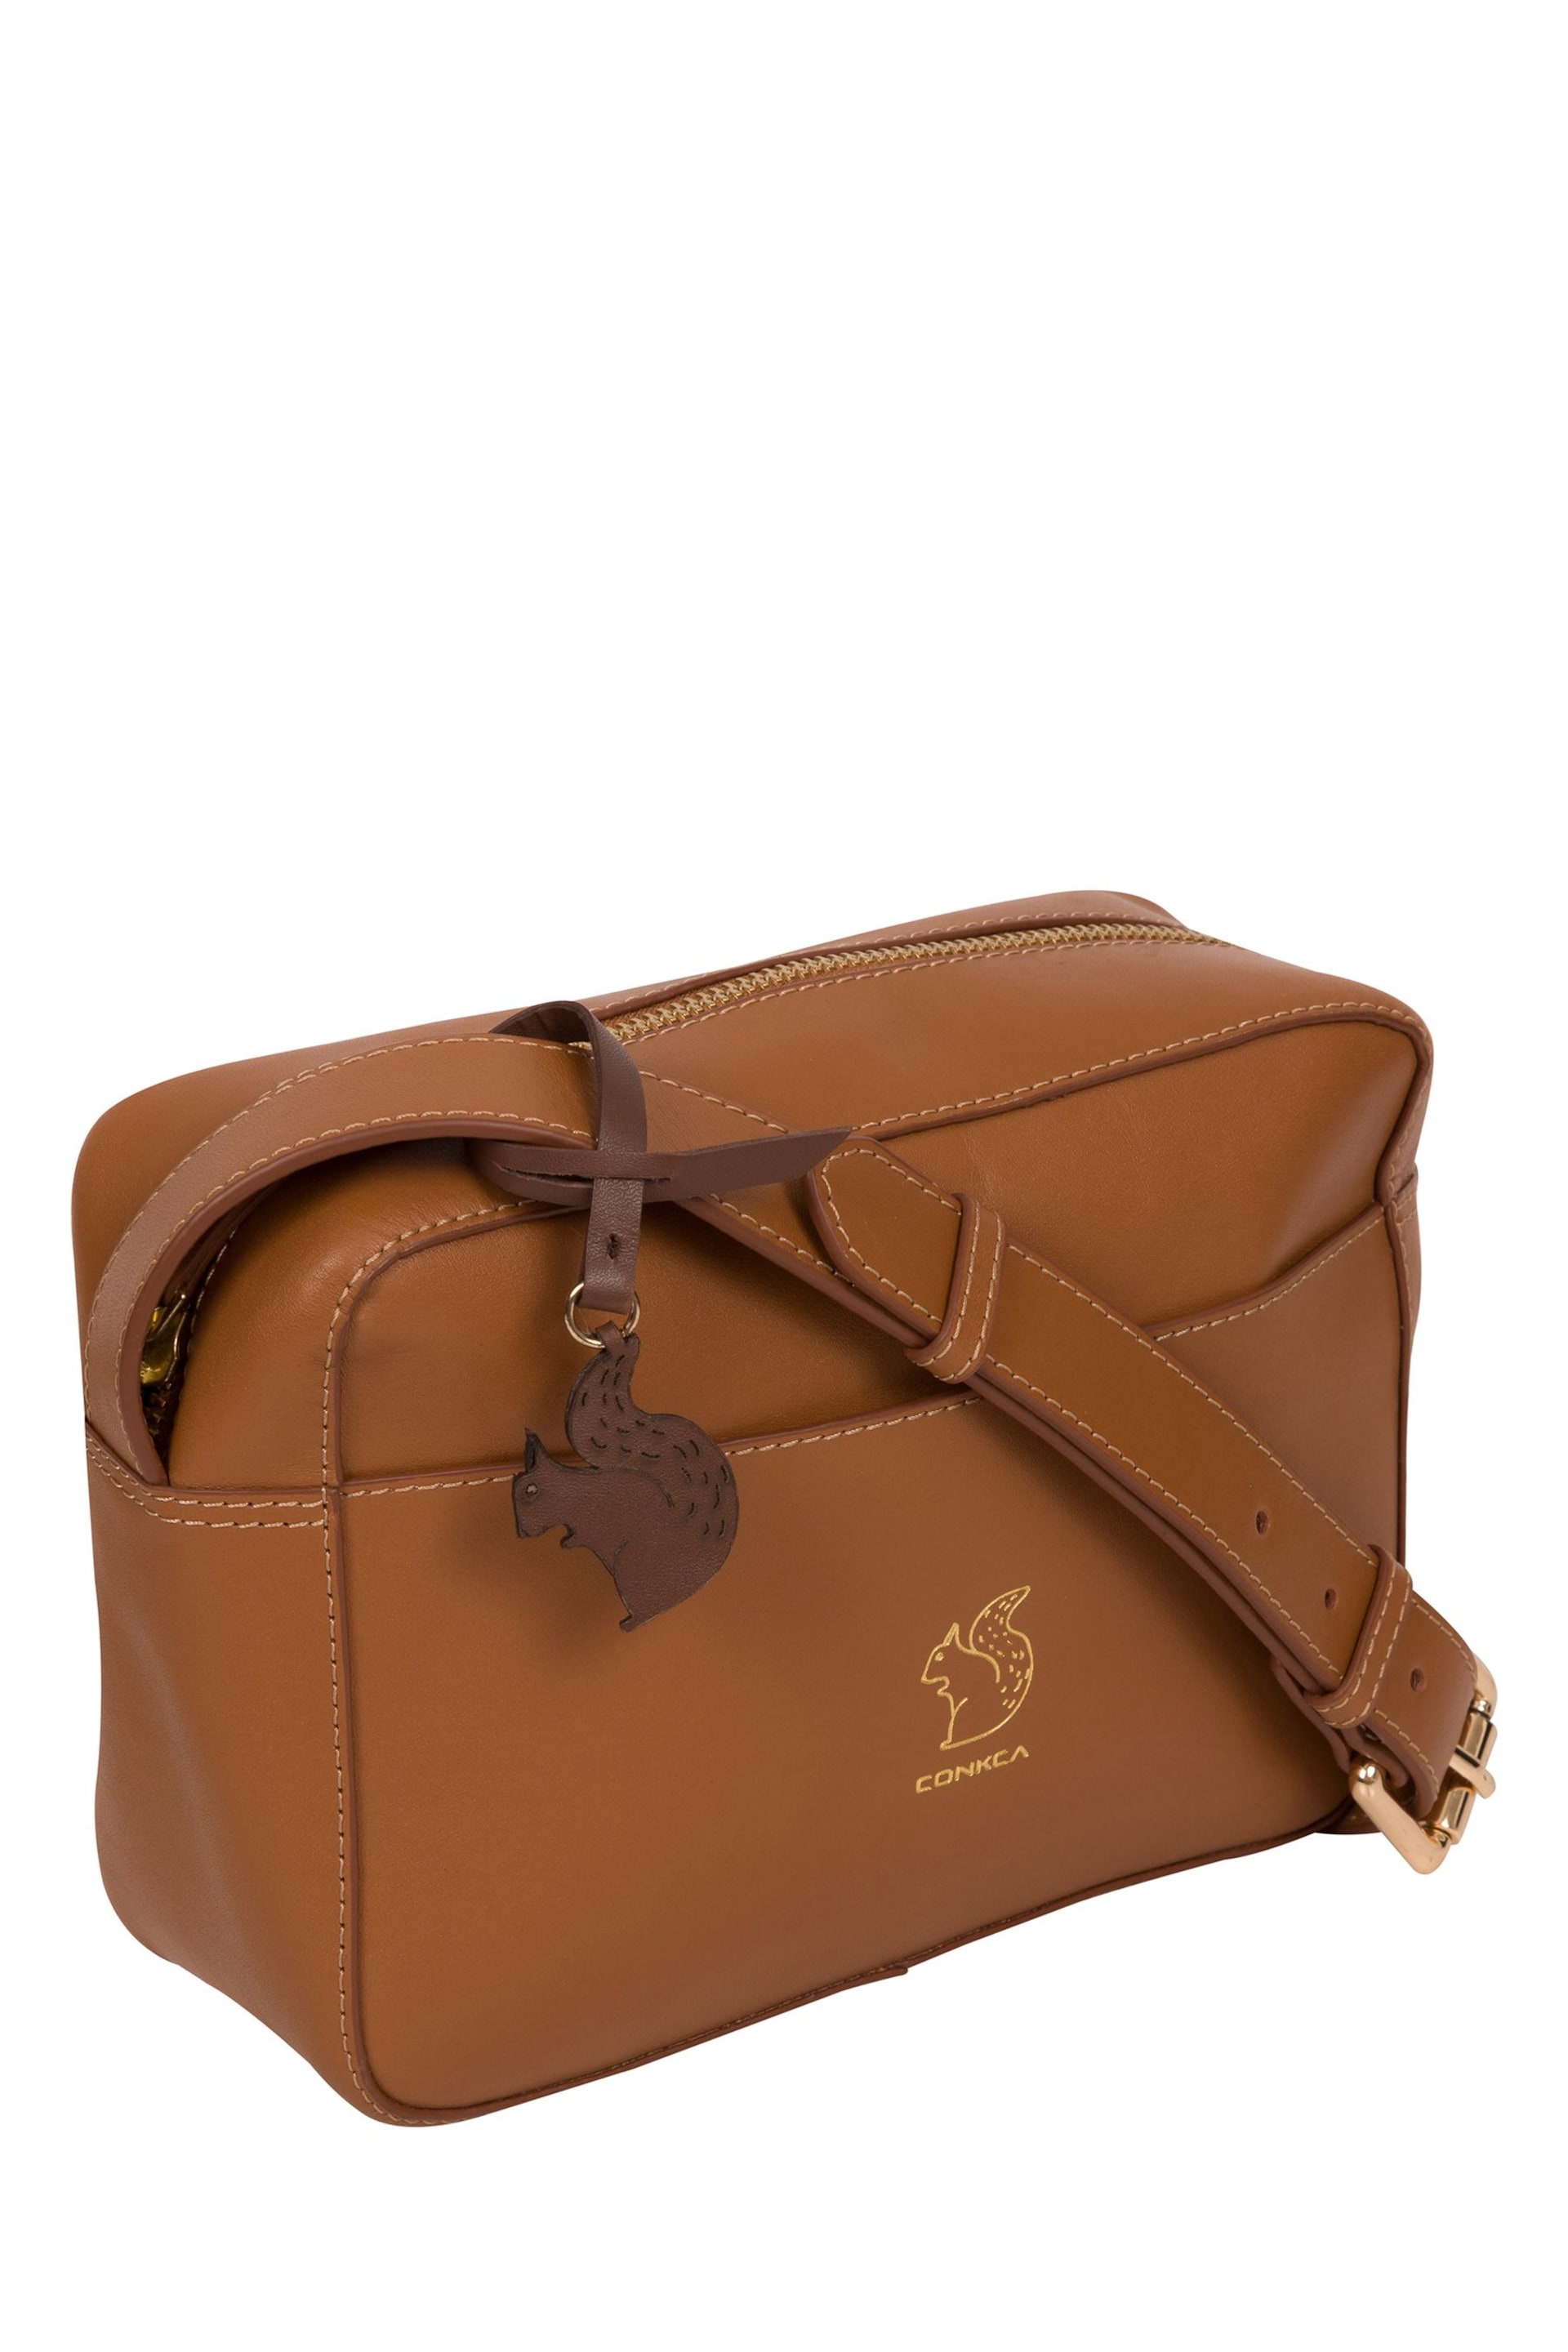 Conkca Tatum Vegetable-Tanned Leather Cross-Body Bag - Image 5 of 5